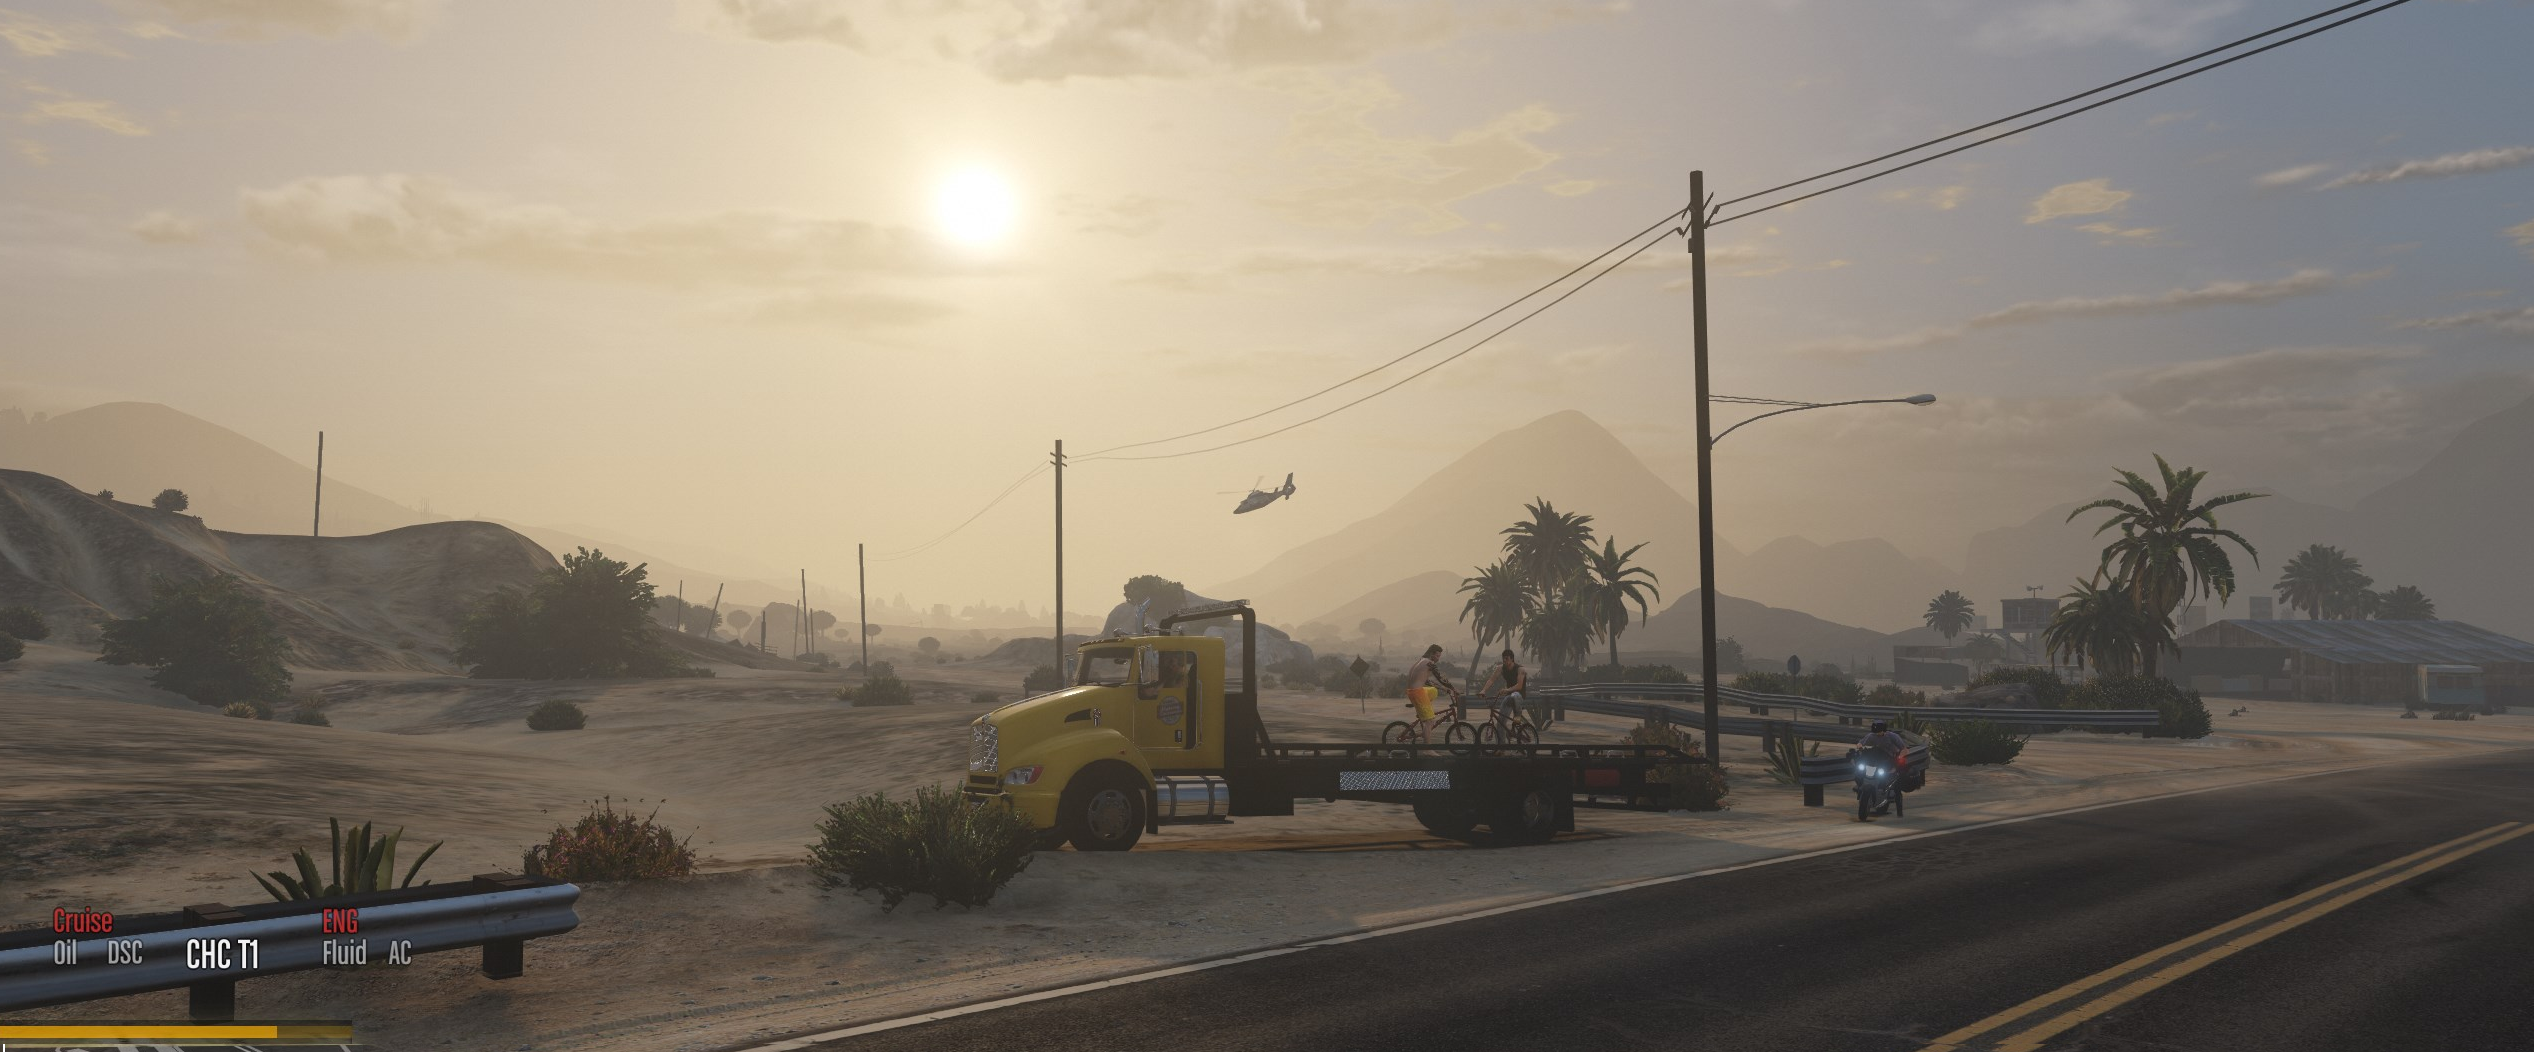 The truck sunset